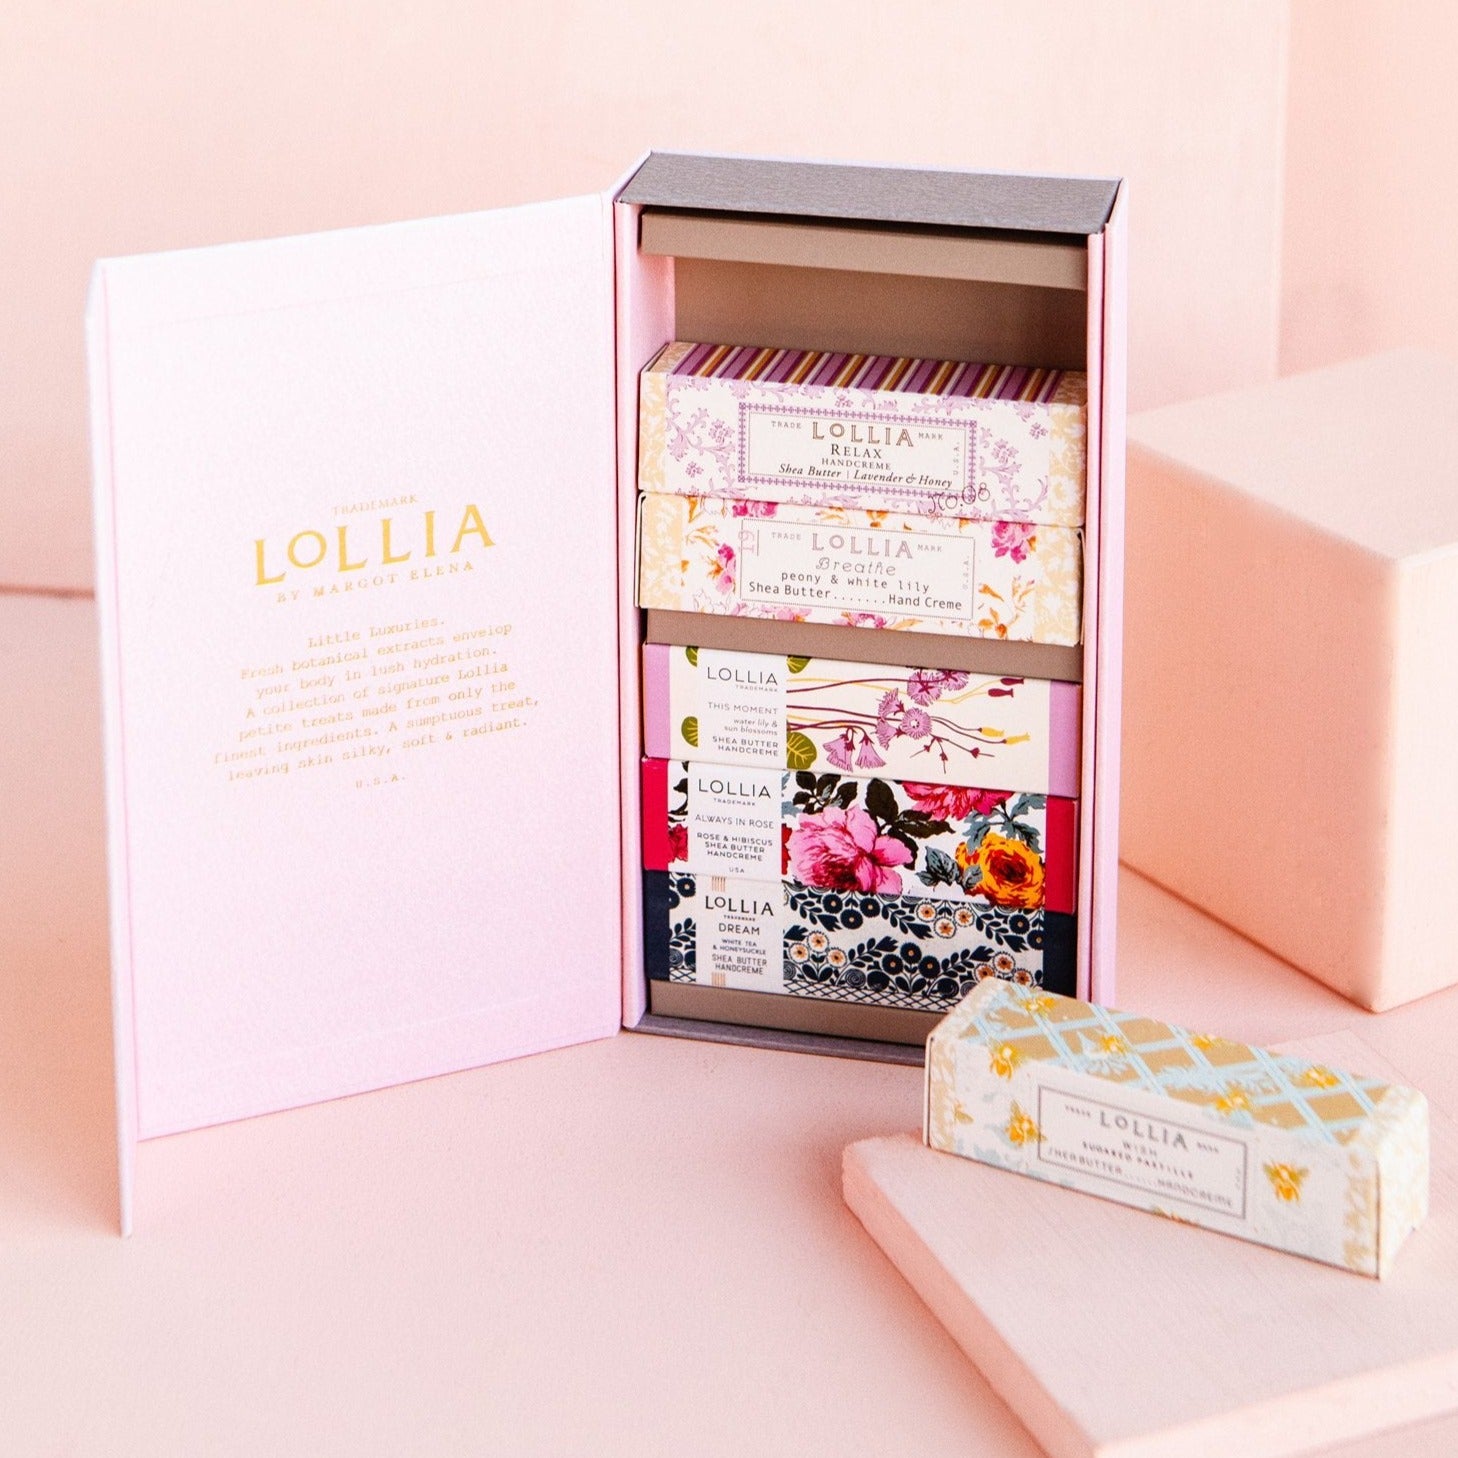 Petite Treat Handcreme Gift Set from Lollia